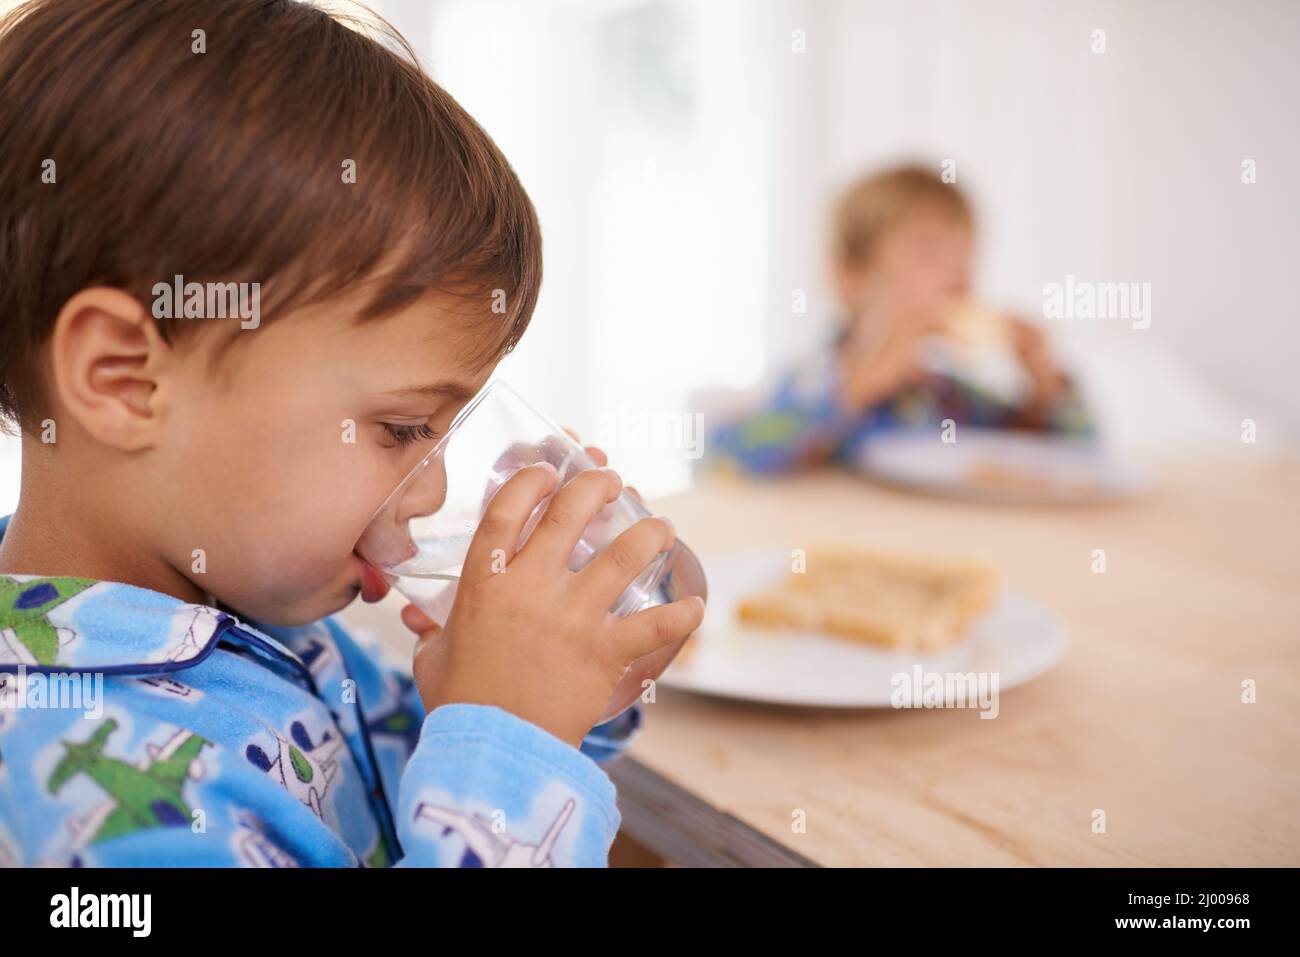 Washing it down. A cute little boy having a drink of water with breakfast. Stock Photo